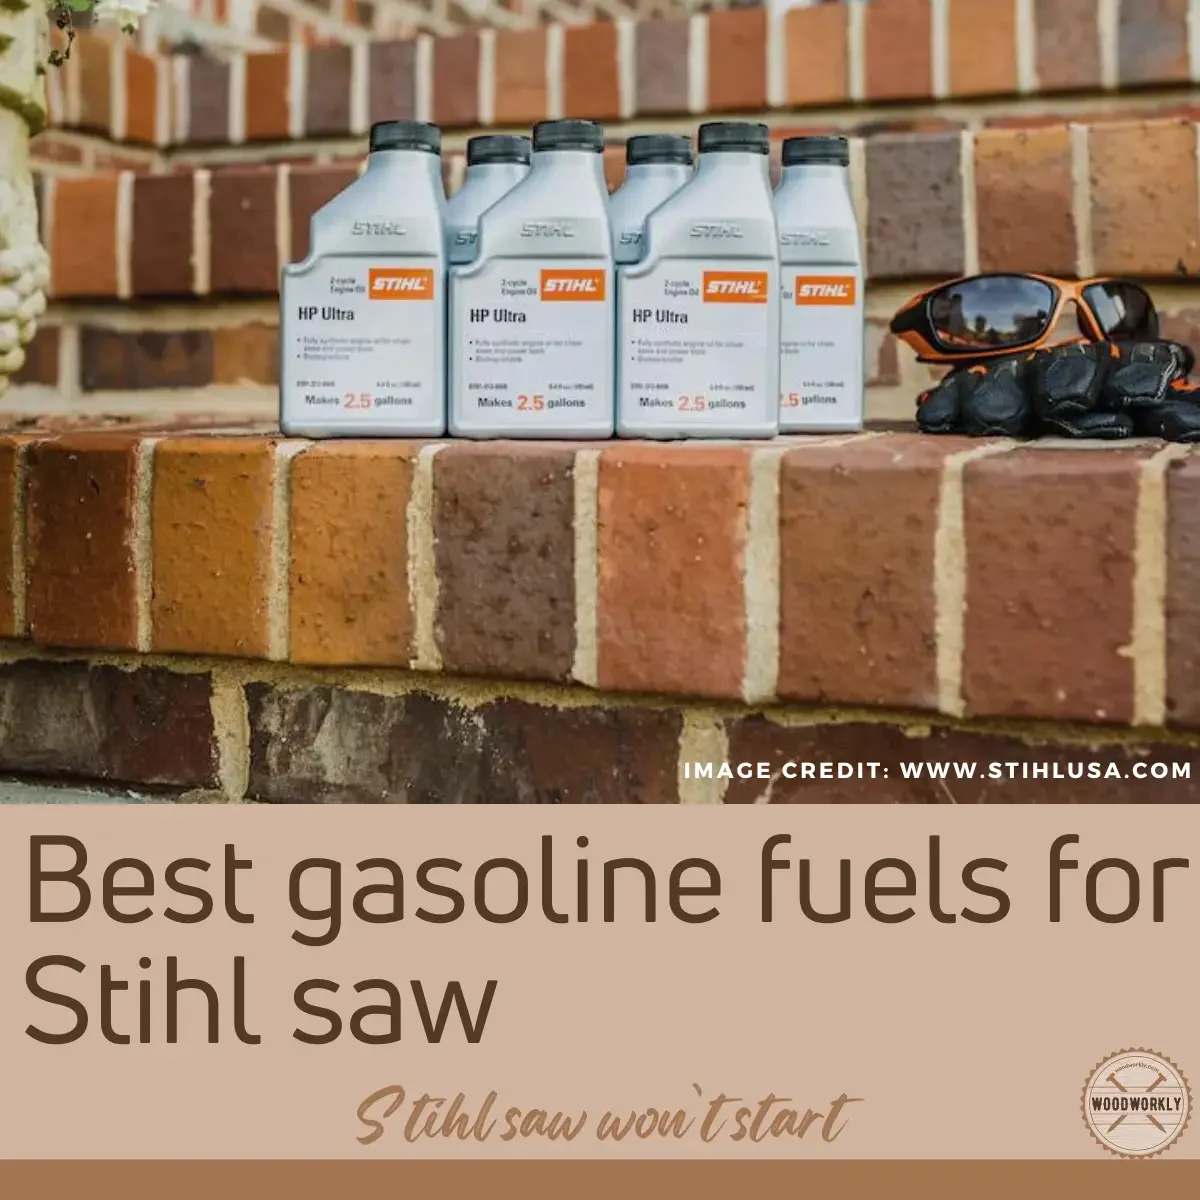 Best gasoline fuels for Stihl saw